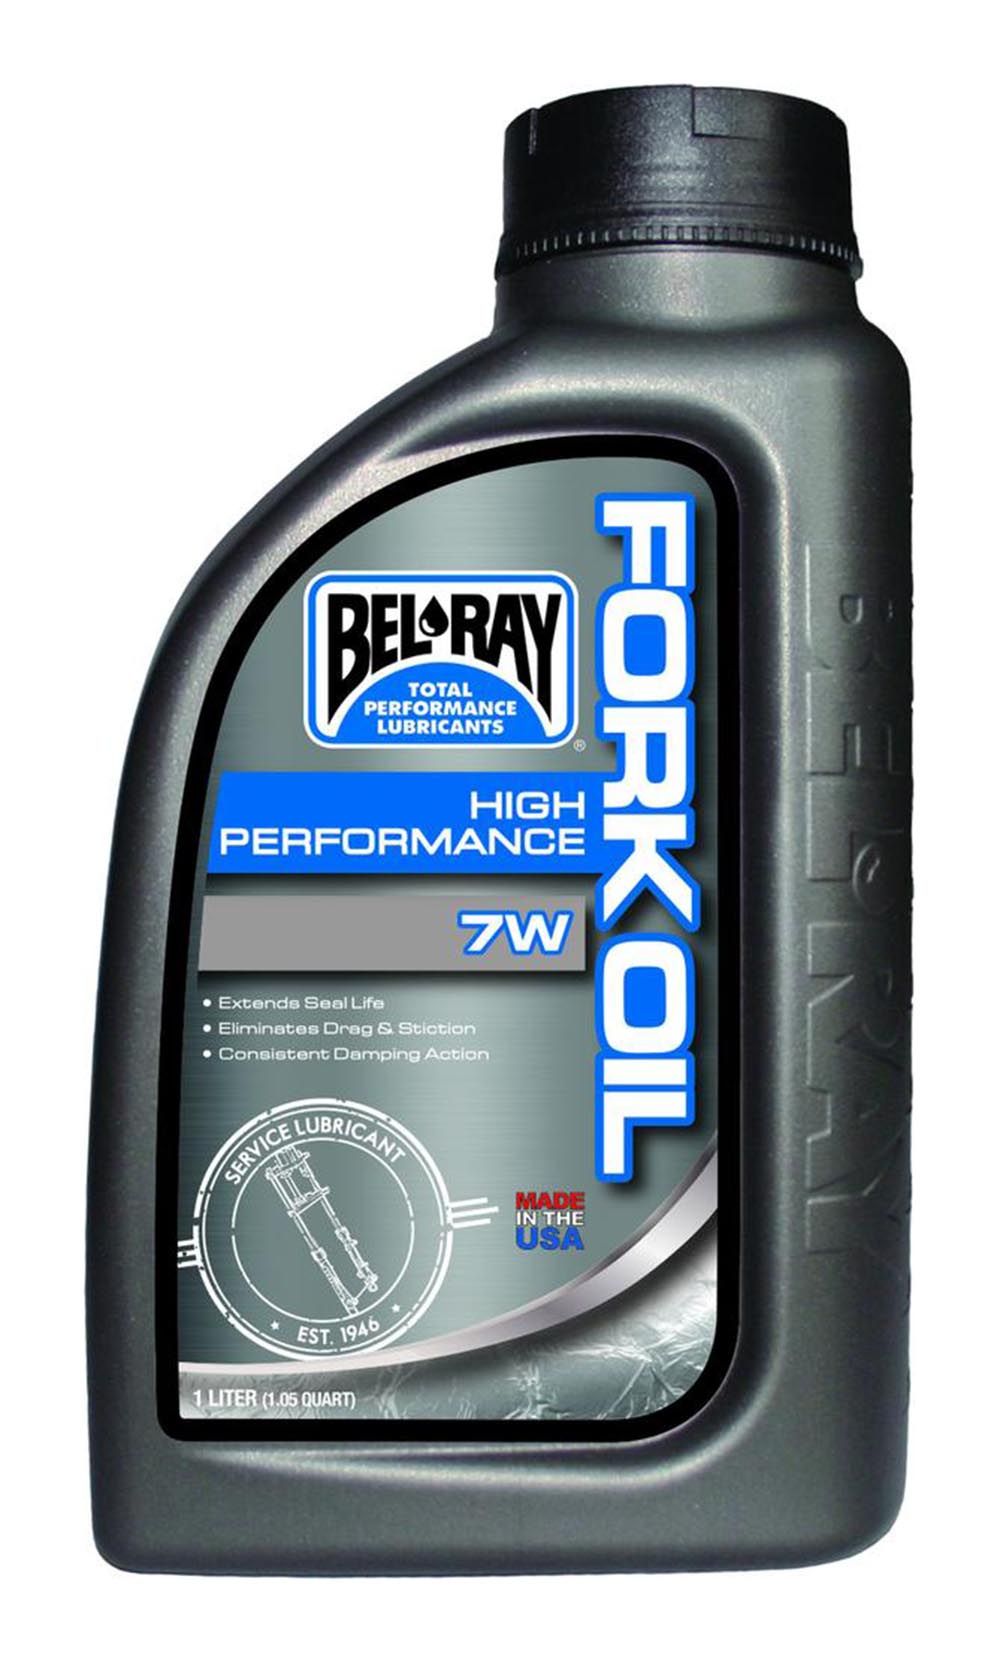 Bel-Ray High Performance Fork Oil 7W (1 Liter)